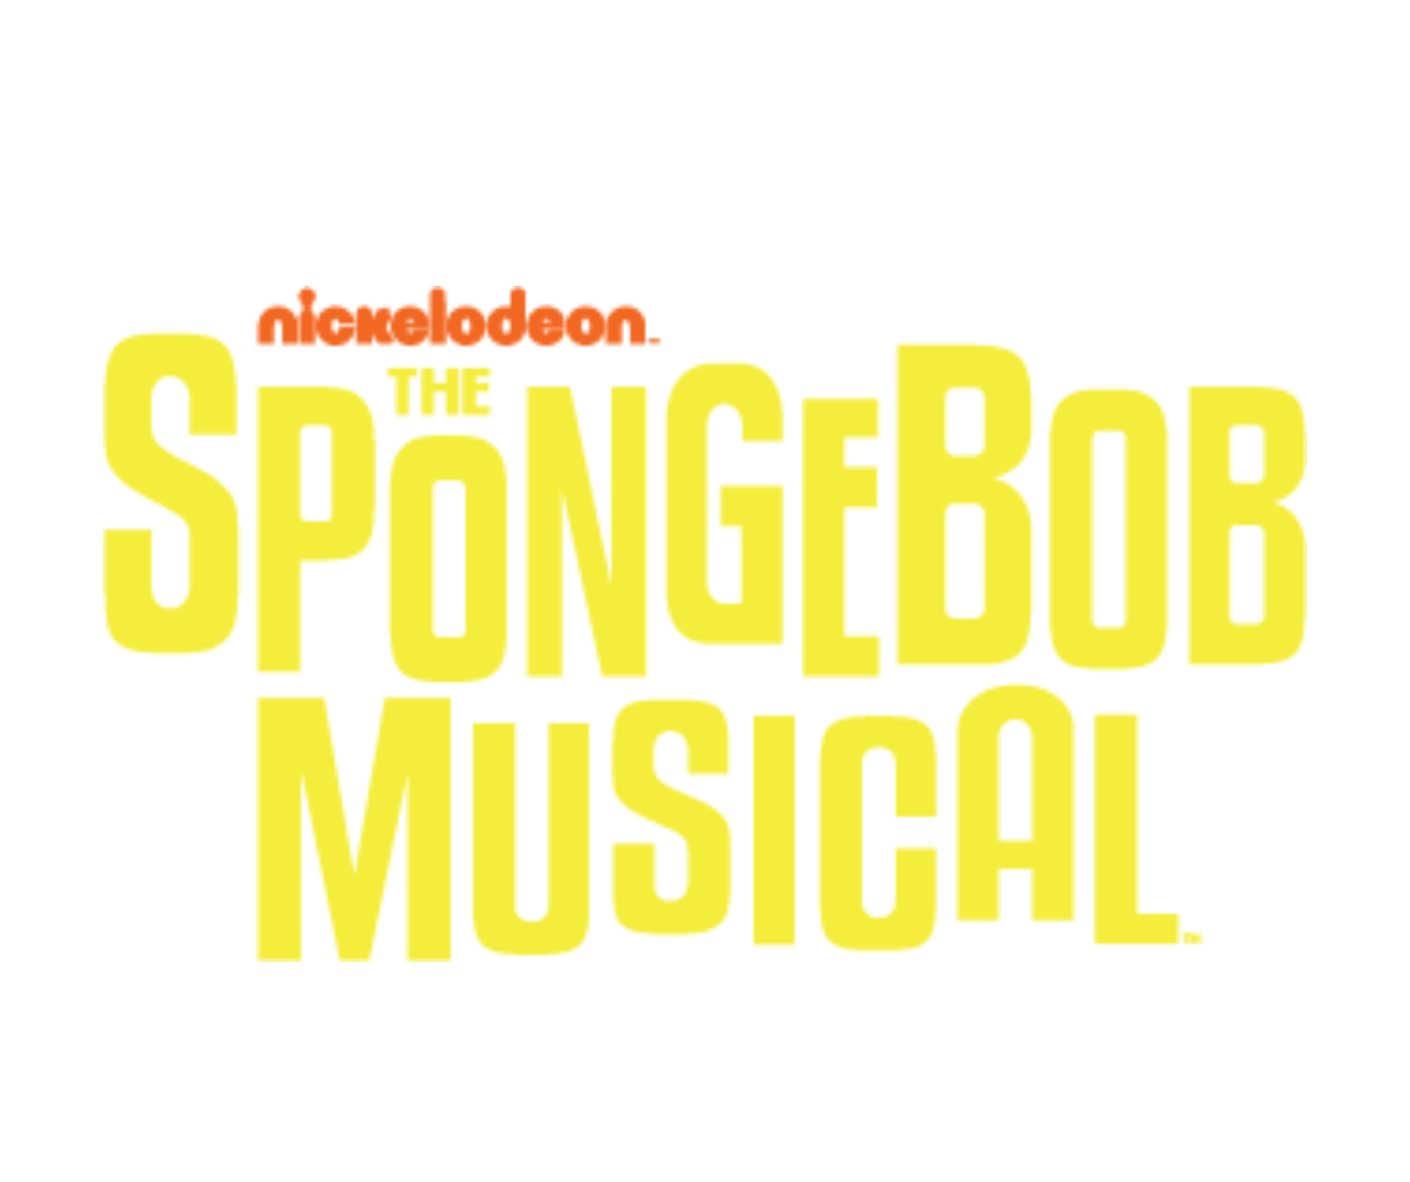 The Spongebob Musical